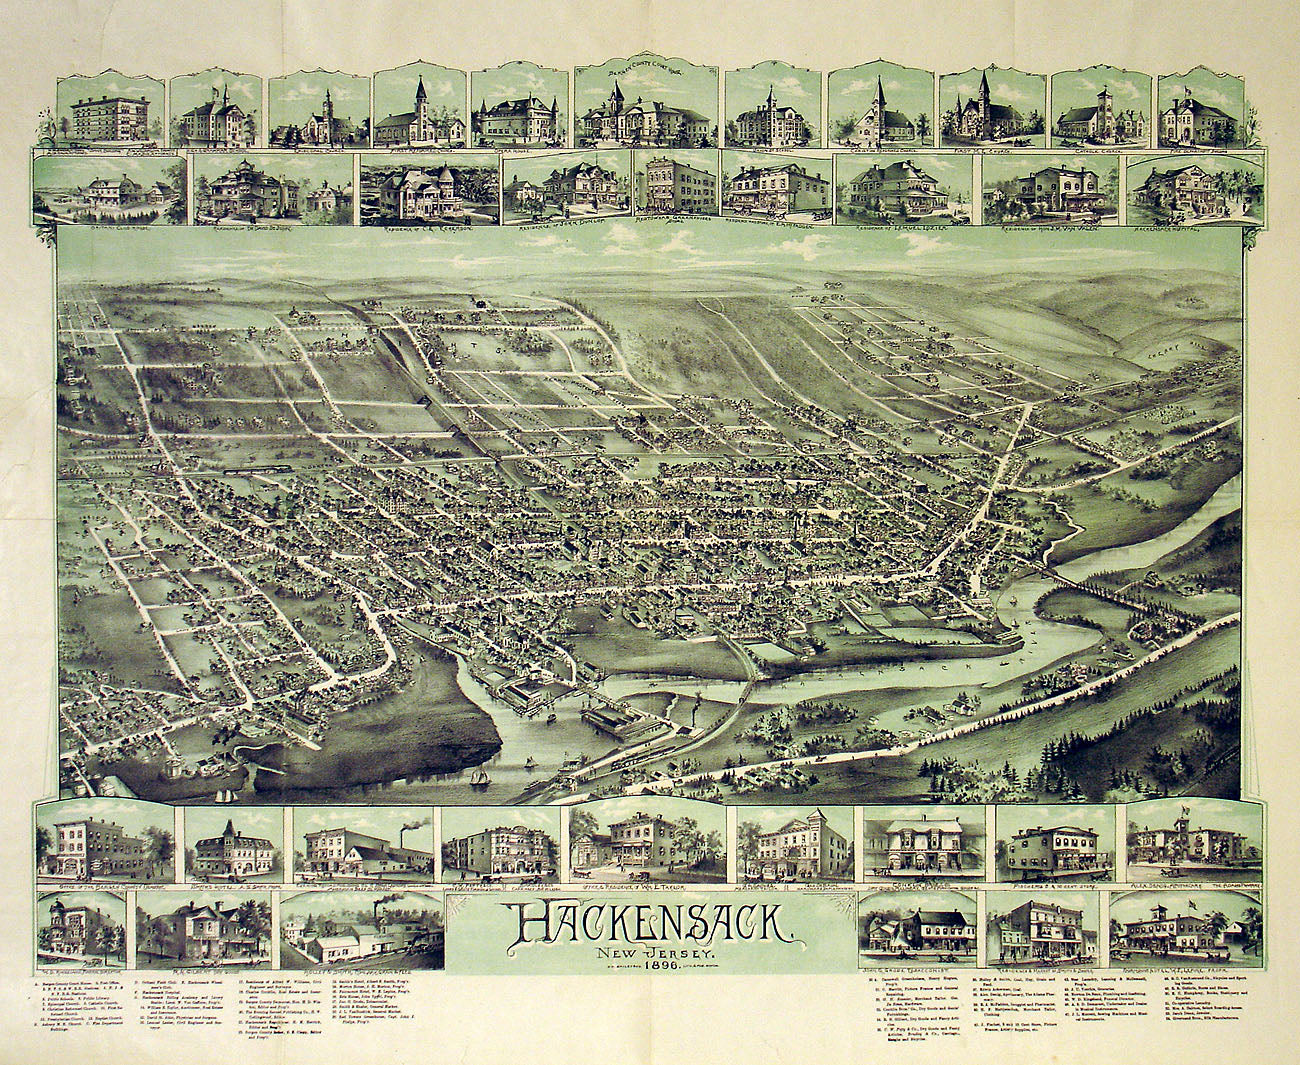 (NJ - Hackensack) Hackensack, New Jersey. 1896.